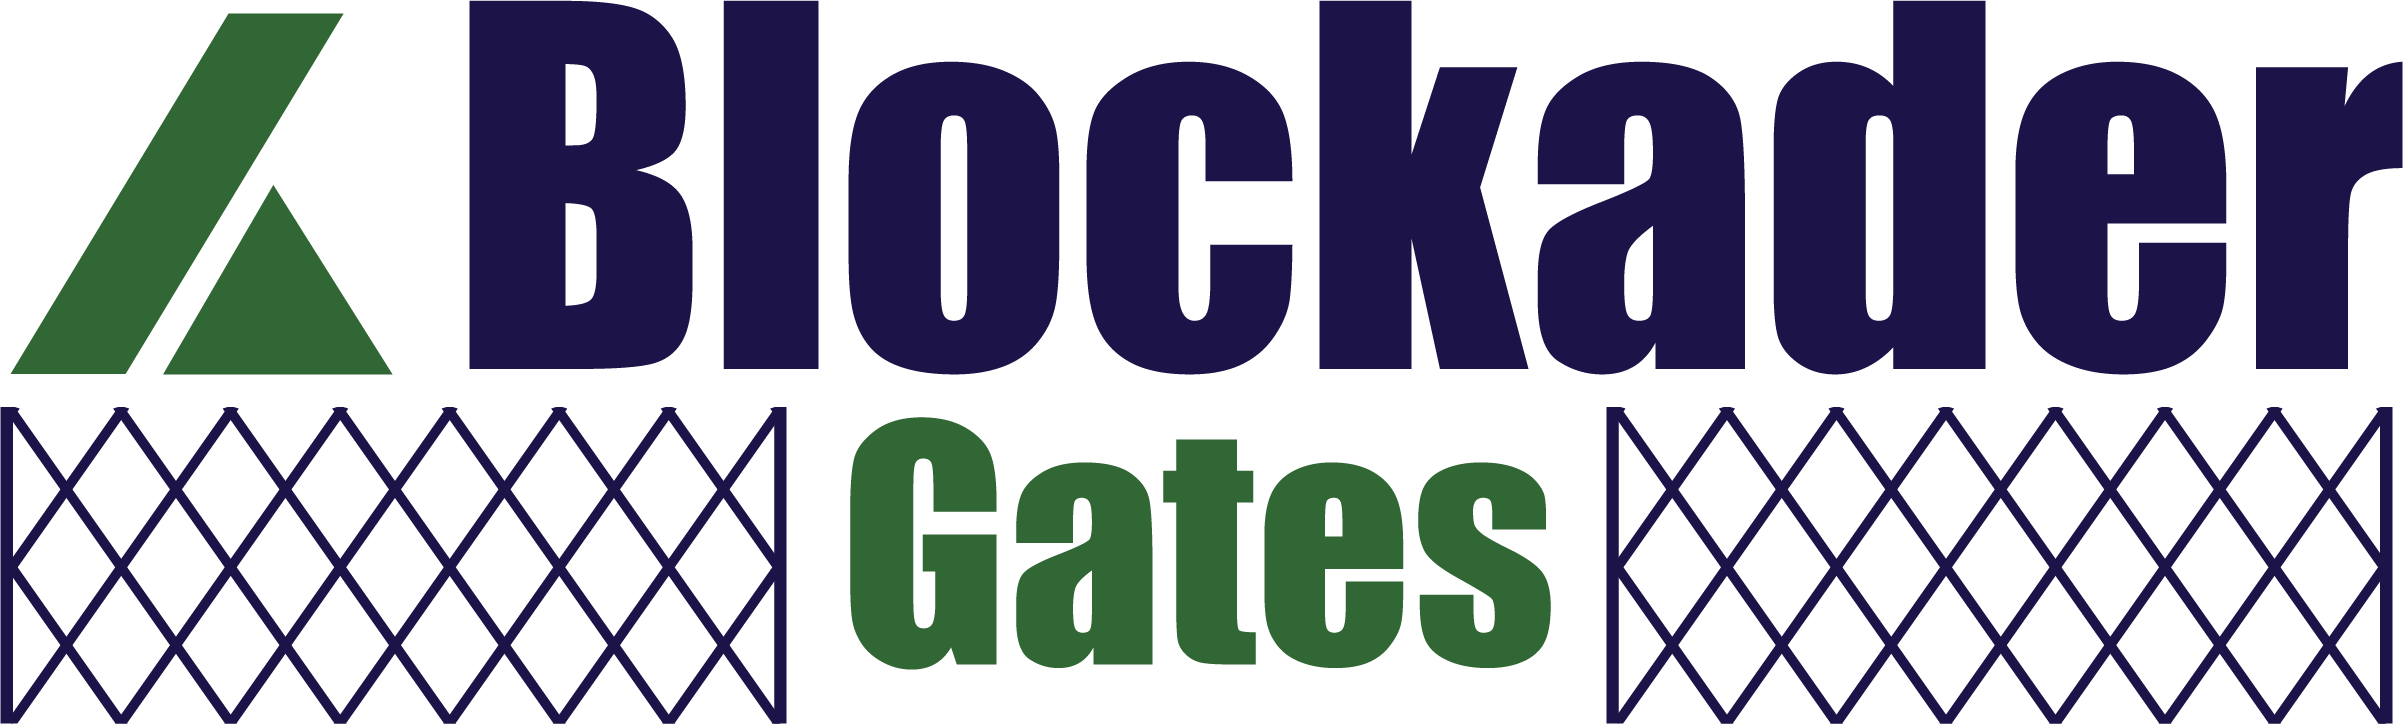 Blockader Gates Logo